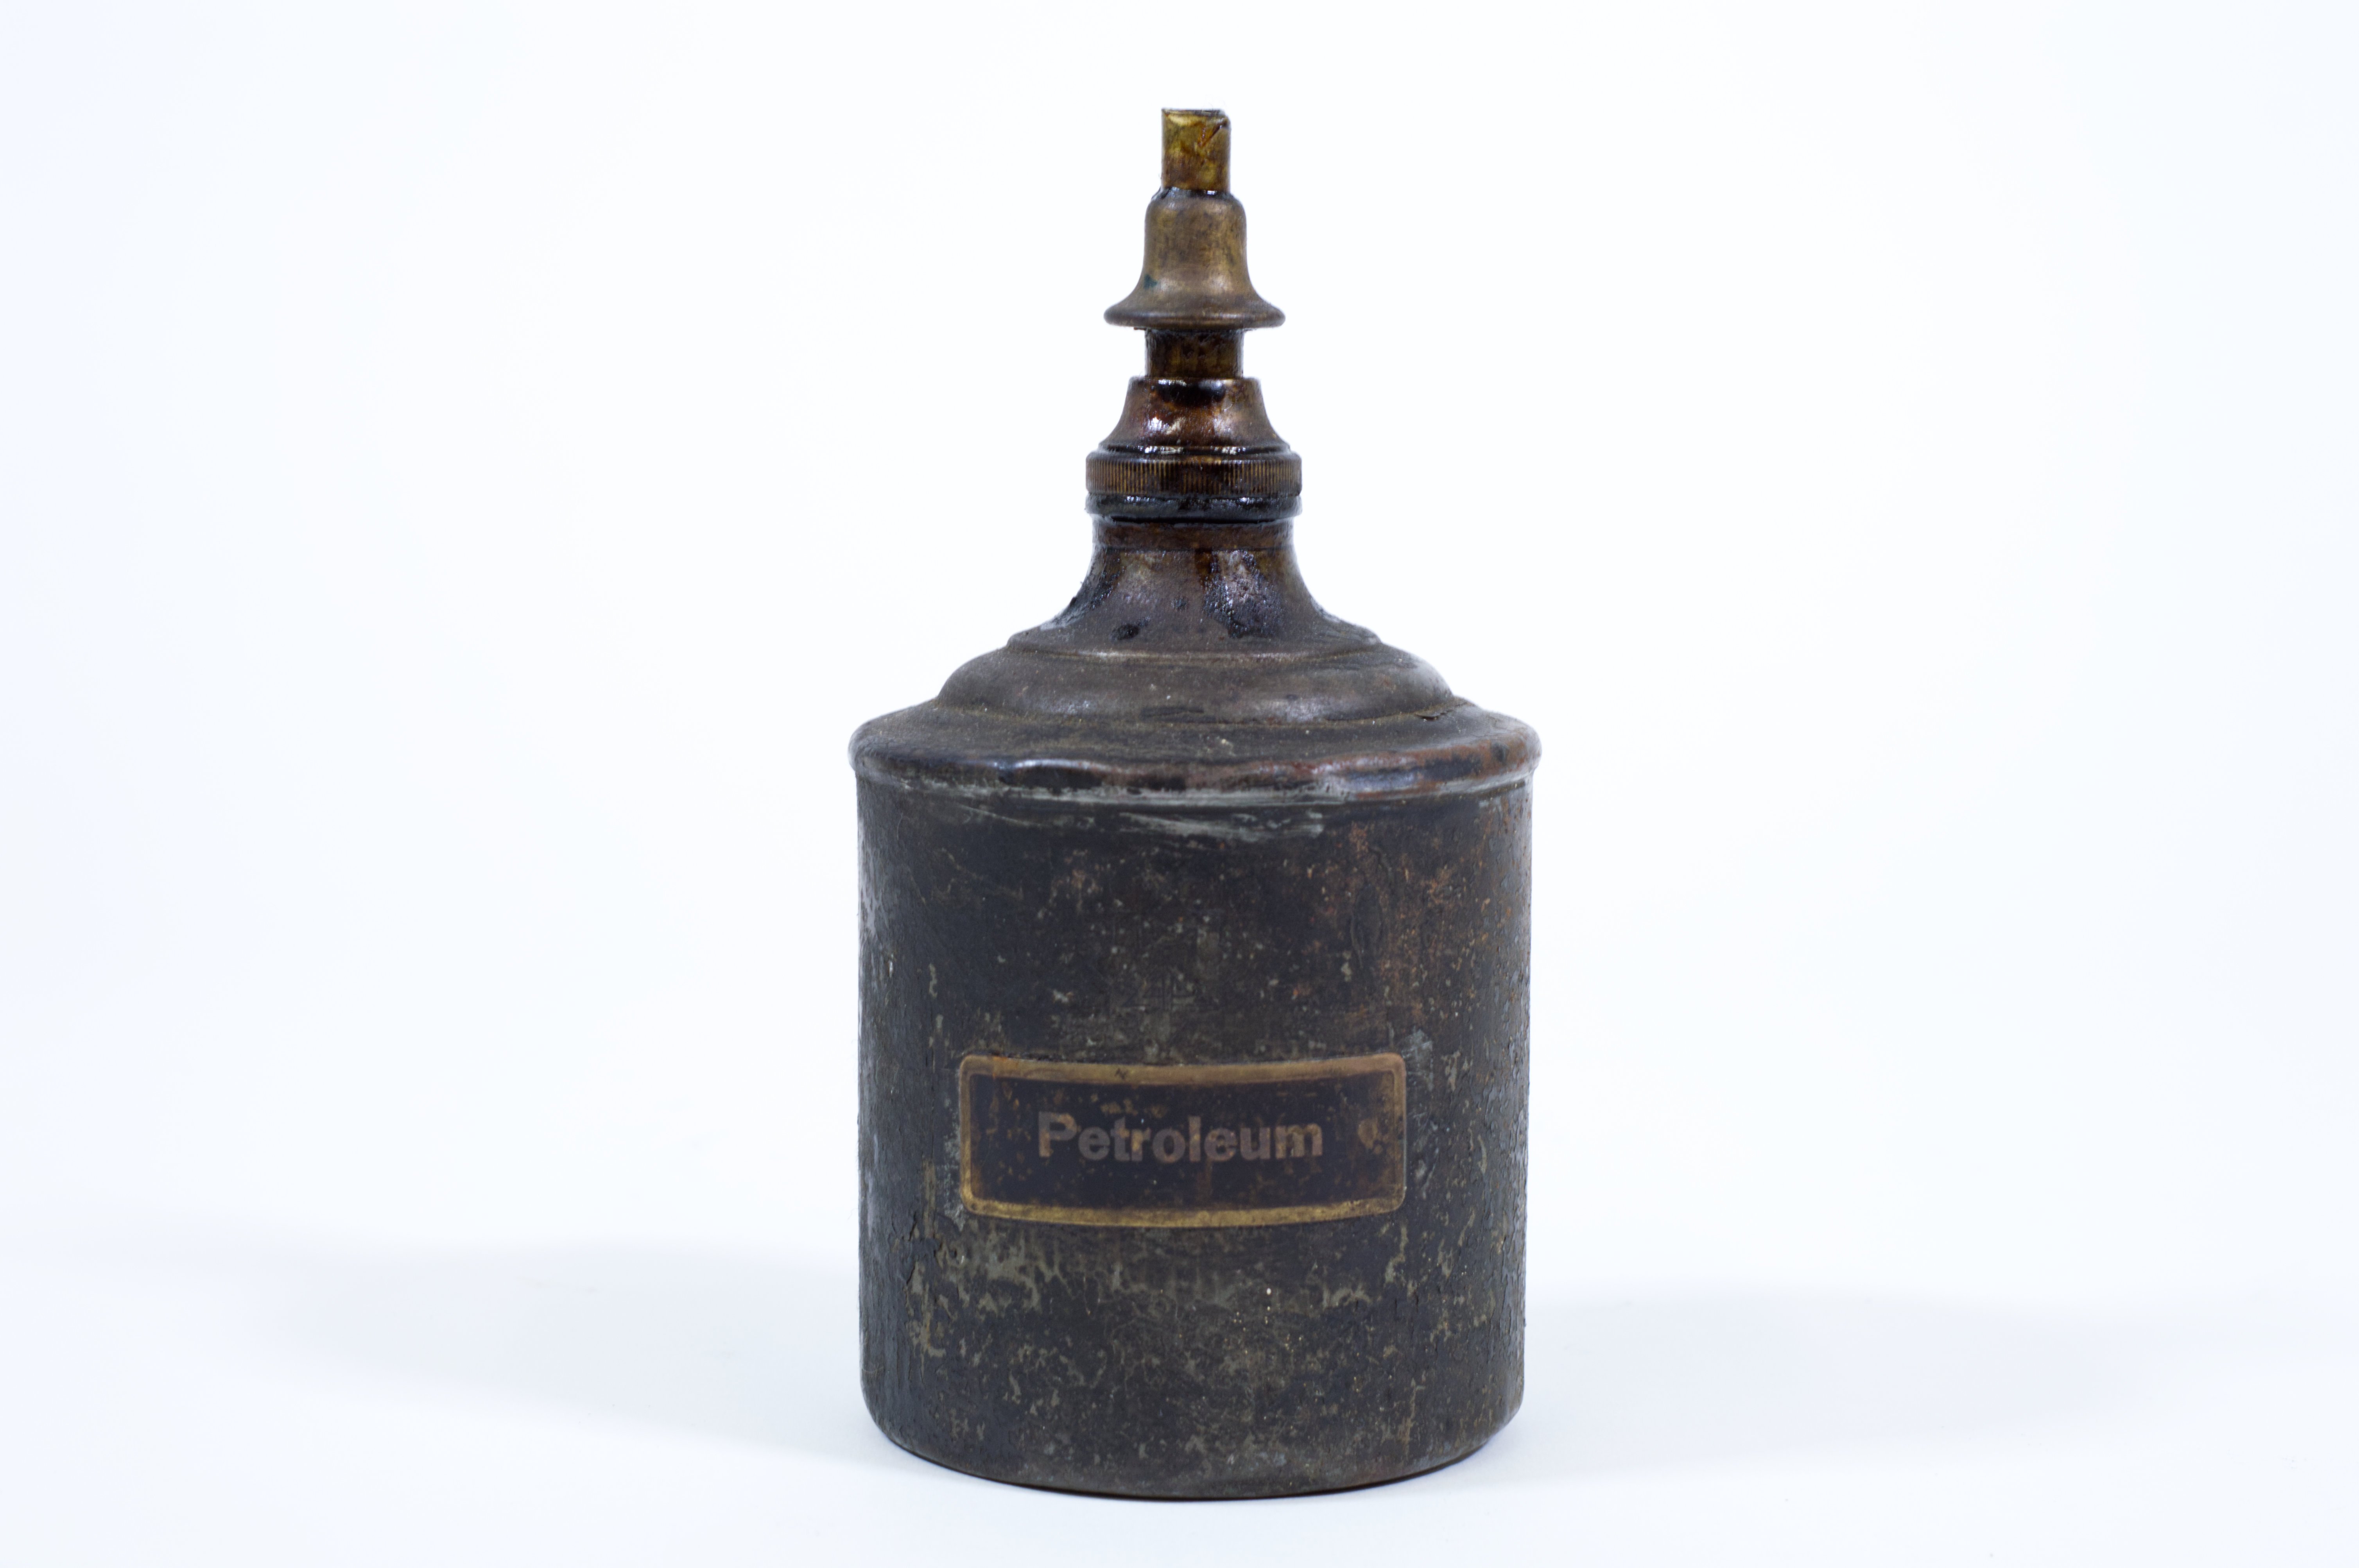 Petroleum-Kanne mit Patentverschluss (Museumsfabrik Pritzwalk CC BY-SA)